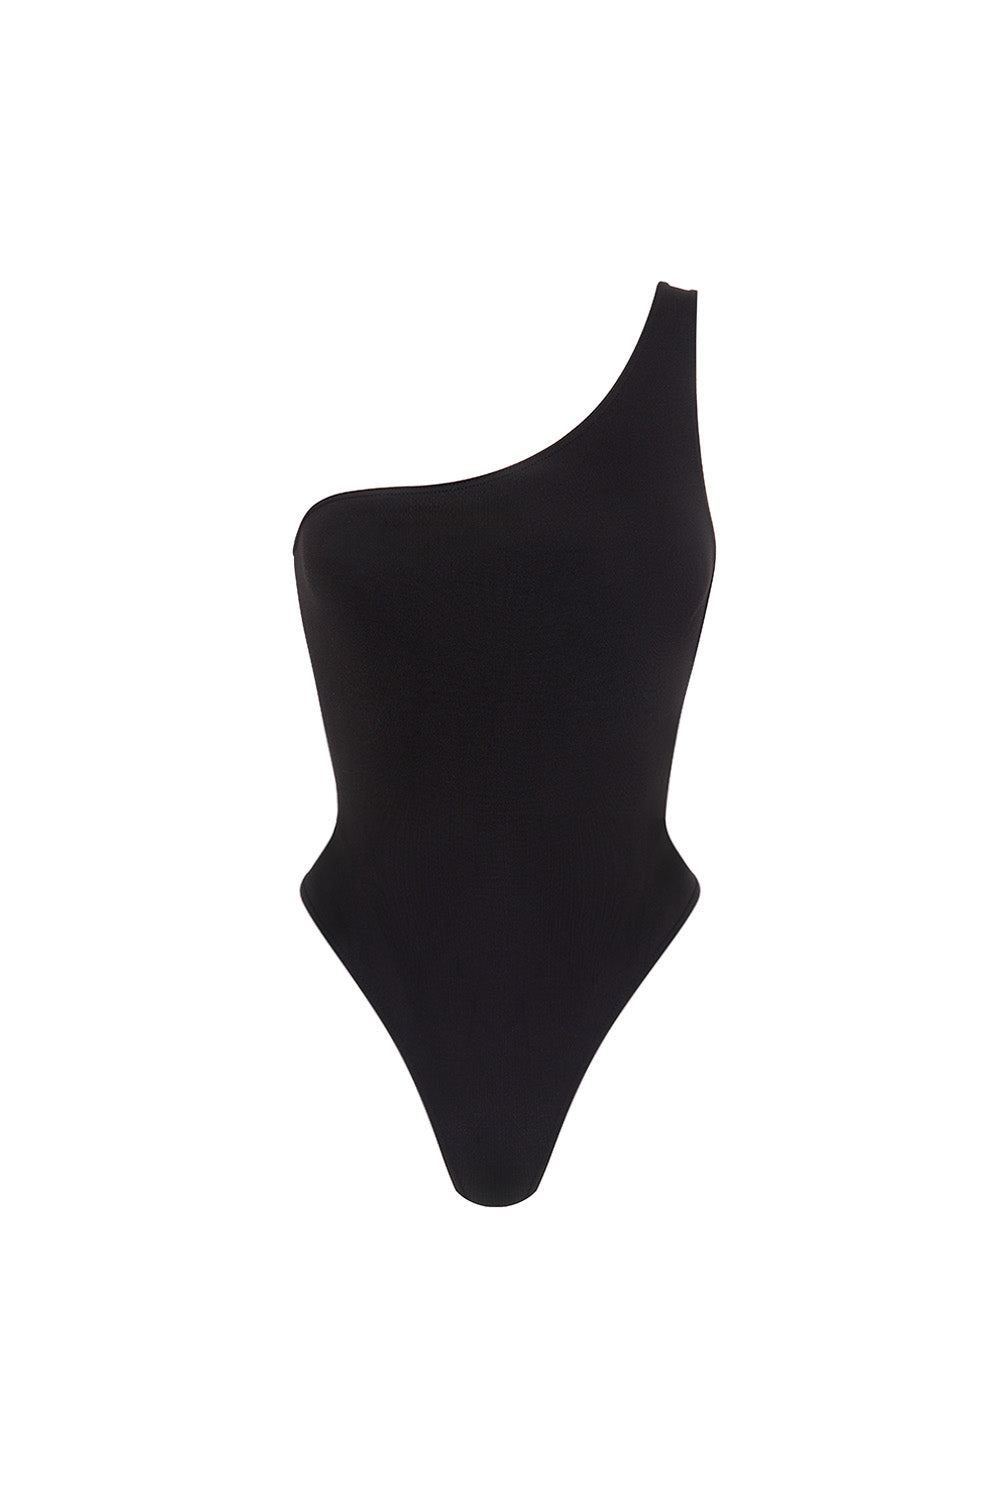 Bodysuit №258 SUPER SOFT Black